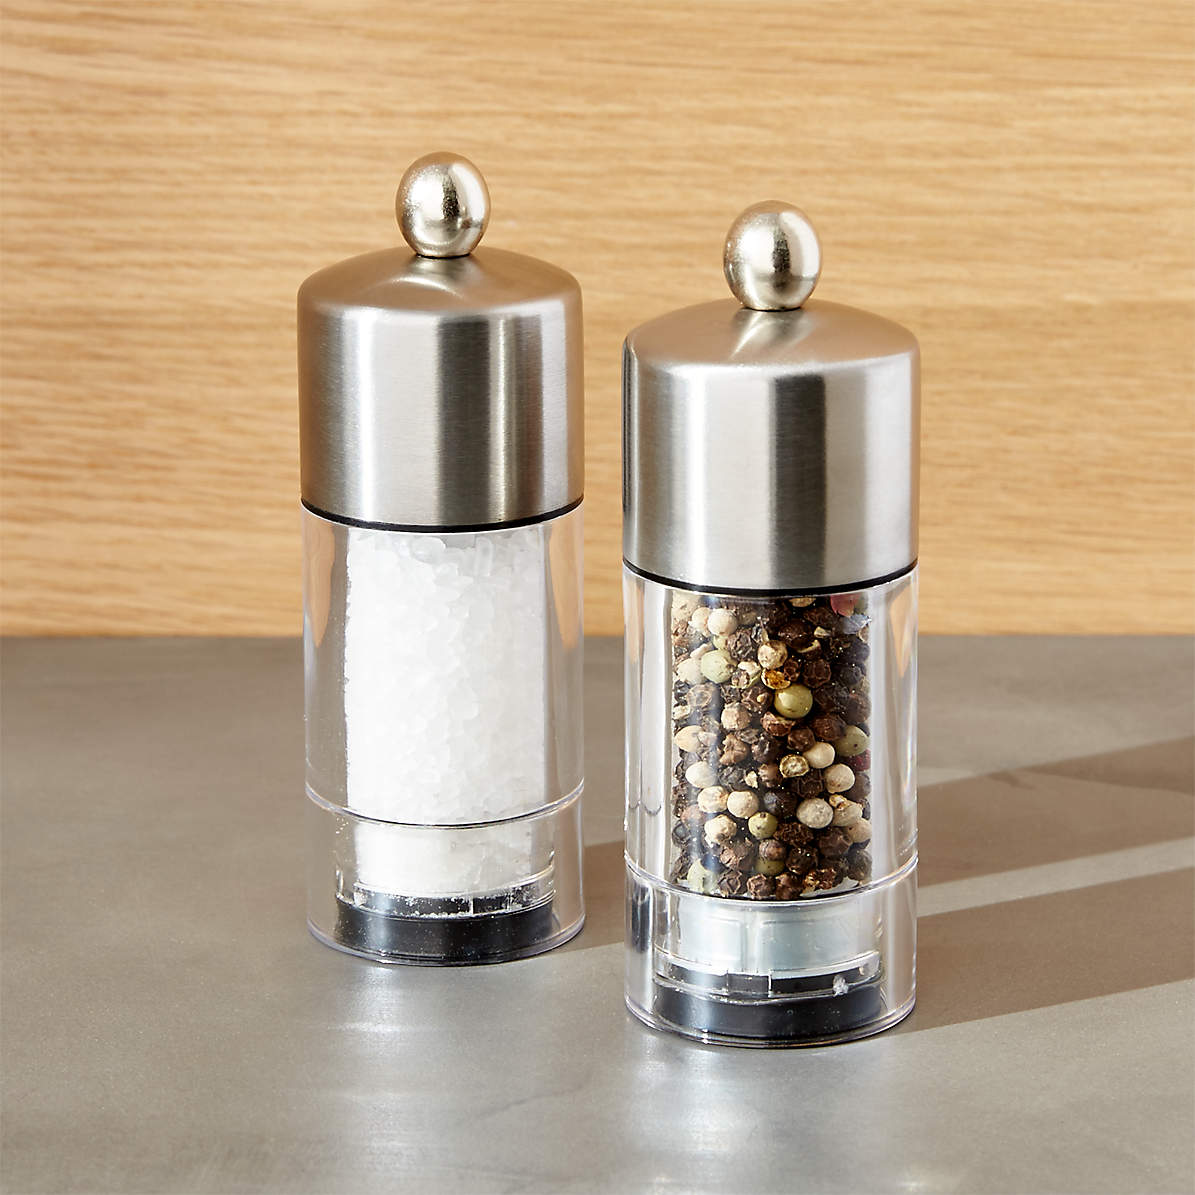 Unique Bargains Wooden Home Kitchen Hand Crank Twist Salt Spice Container Mill  Grinder Shaker Bronze Tone : Target